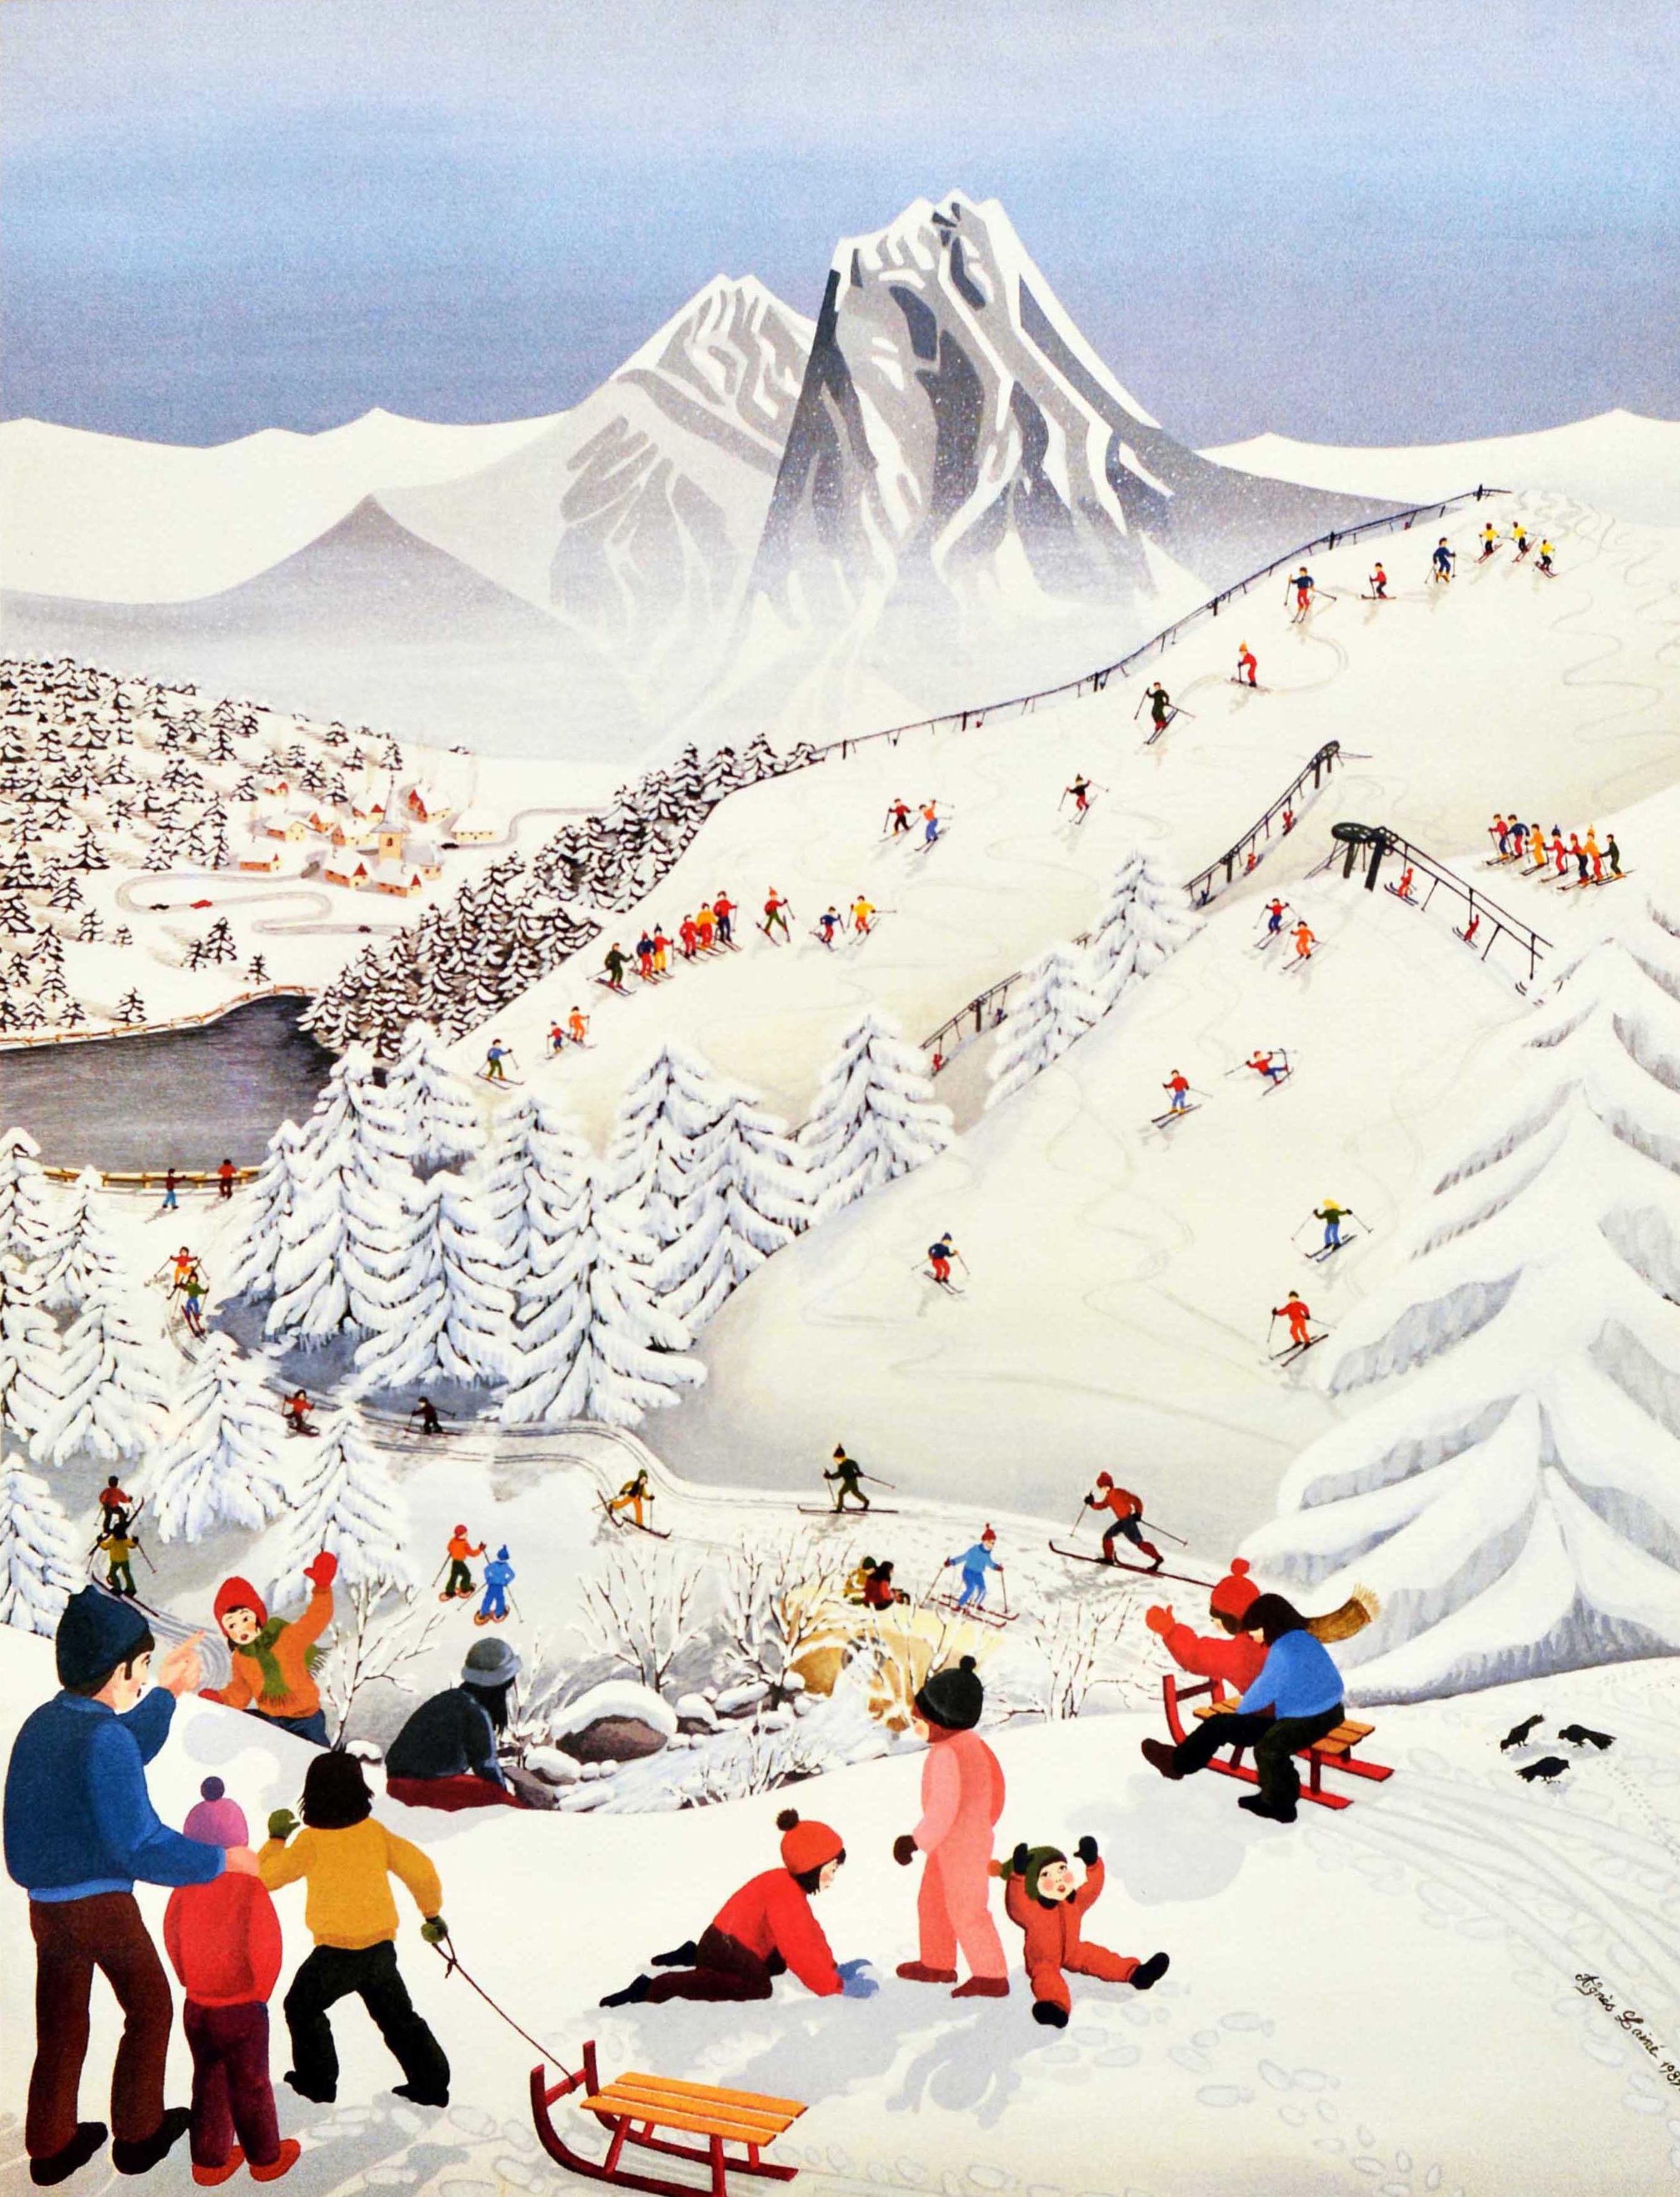 Original Vintage Winter Sport Travel Poster En Savoie Les Karellis Ski Resort - Print by Unknown